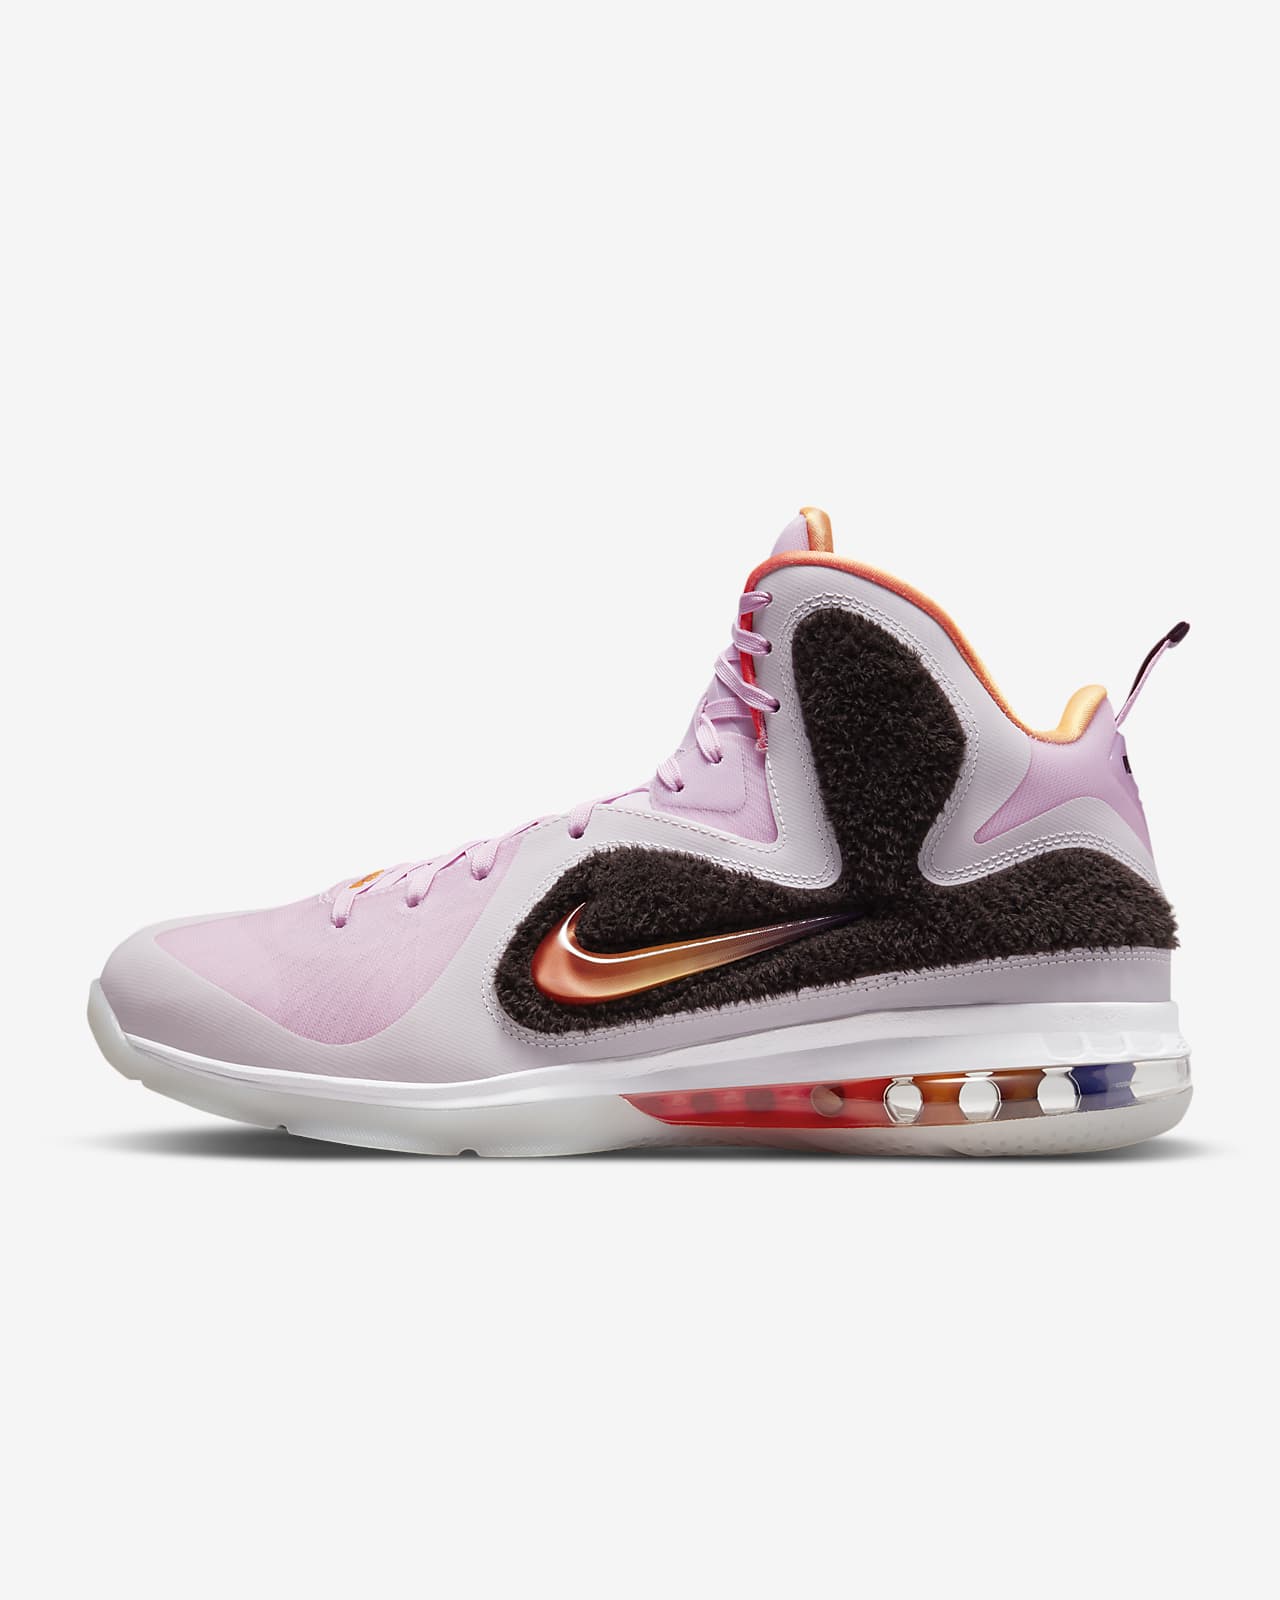 Nike Lebron IX ‘Regal Pink / Velvet Brown’